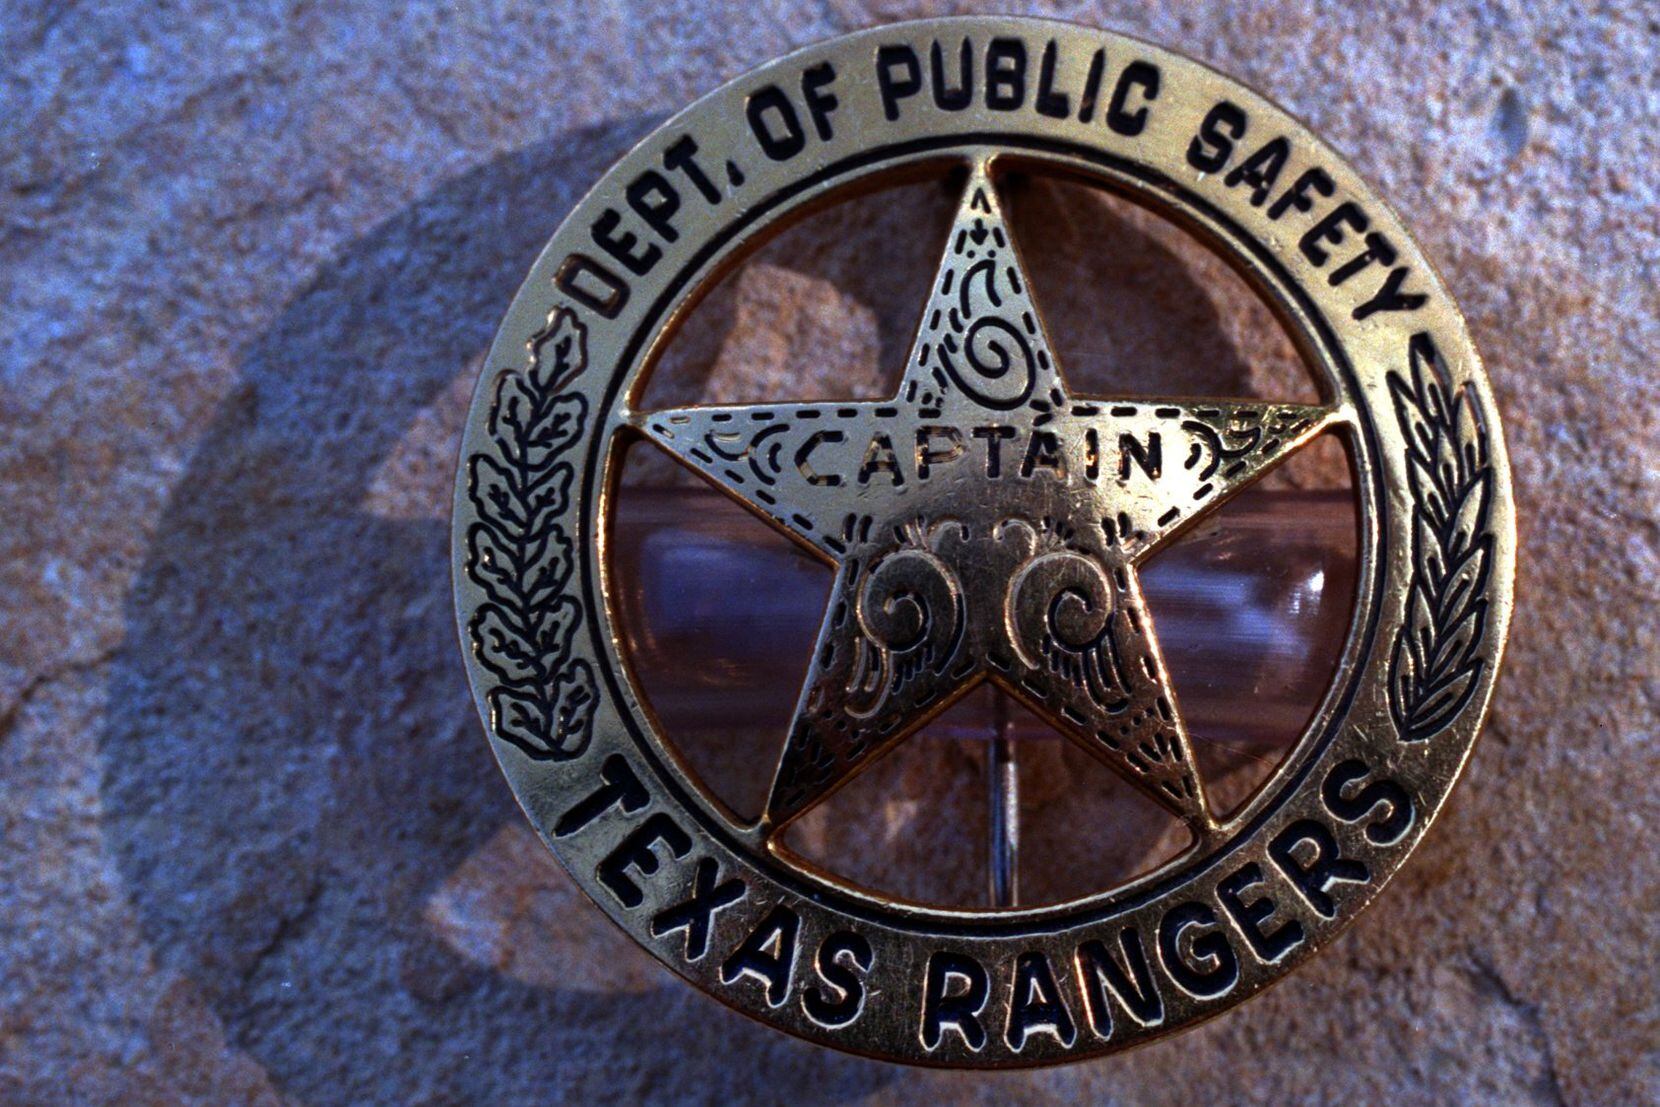 Texas Rangers Turn 200: A C&I Special Tour